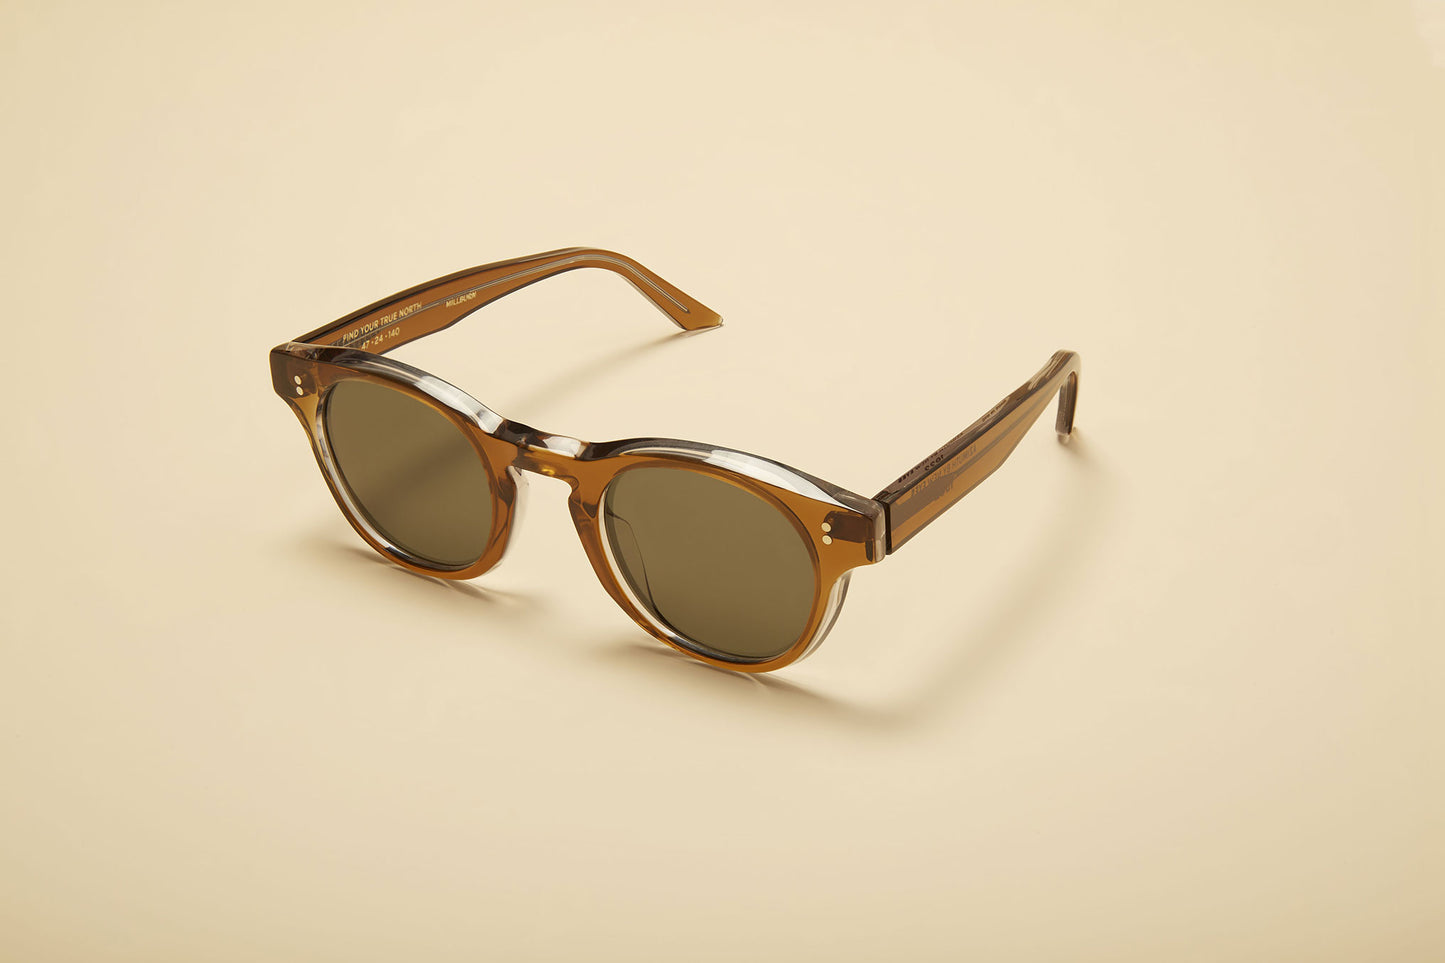 Round brown designer sunglasses